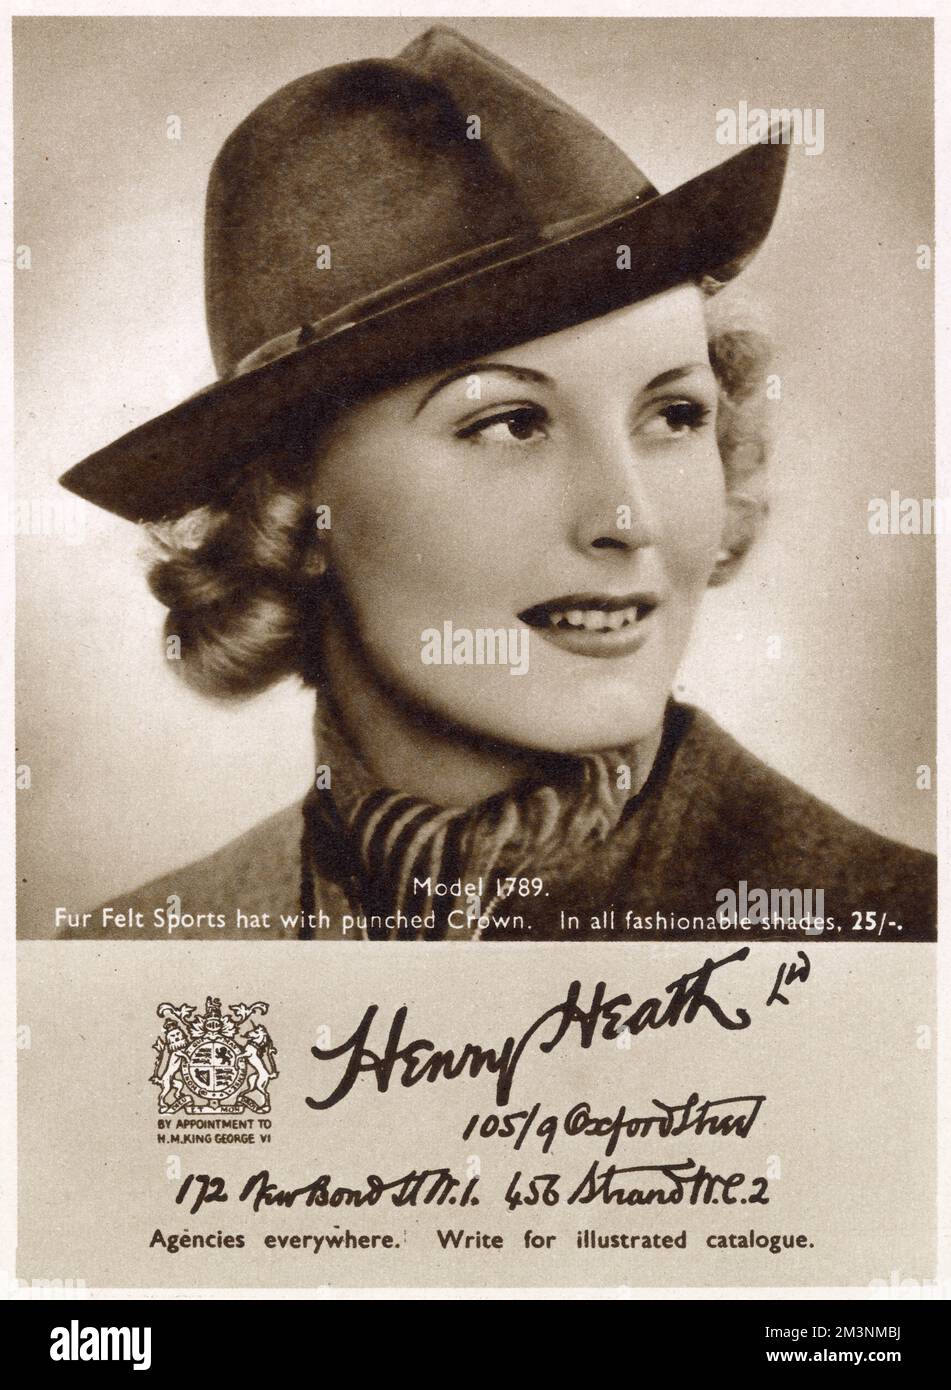 Woman wearing felt homburg hat. Stock Photo